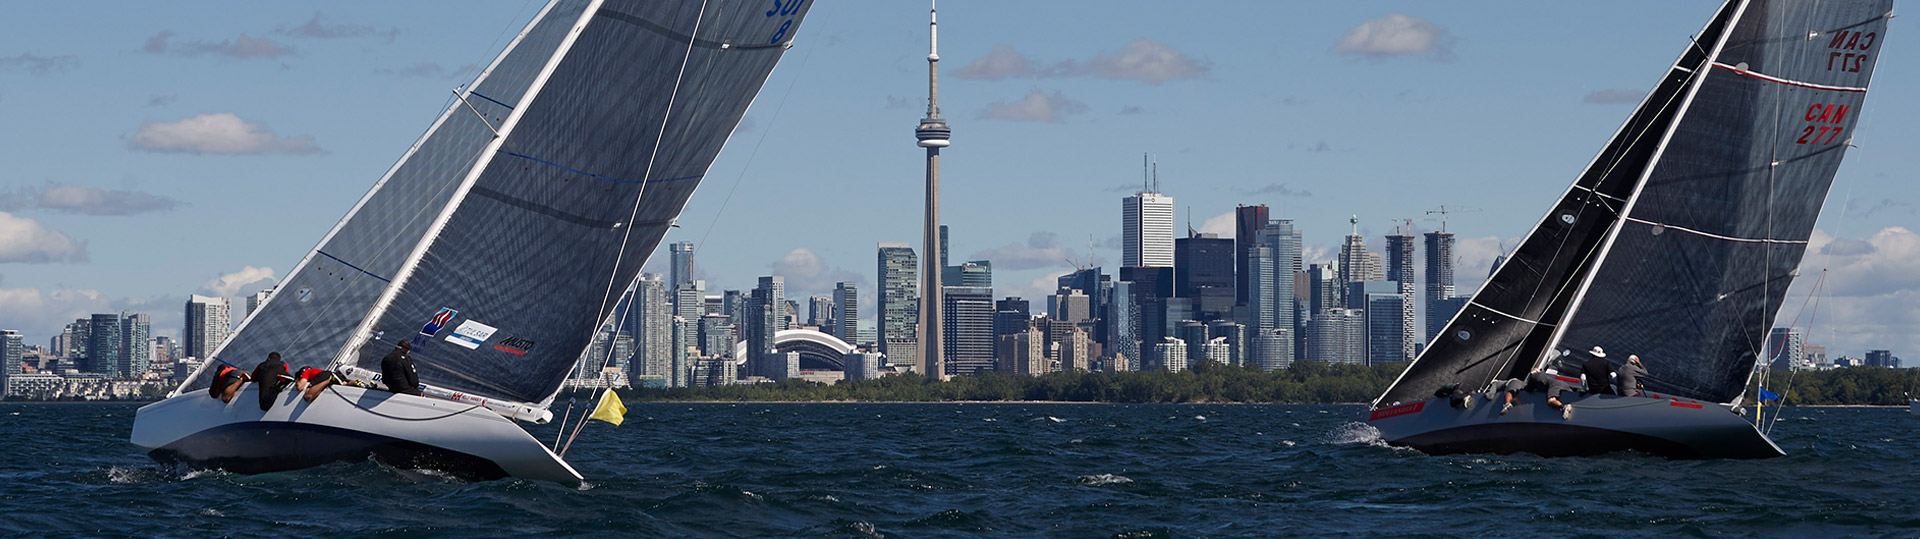 royal canadian yacht club membership fee